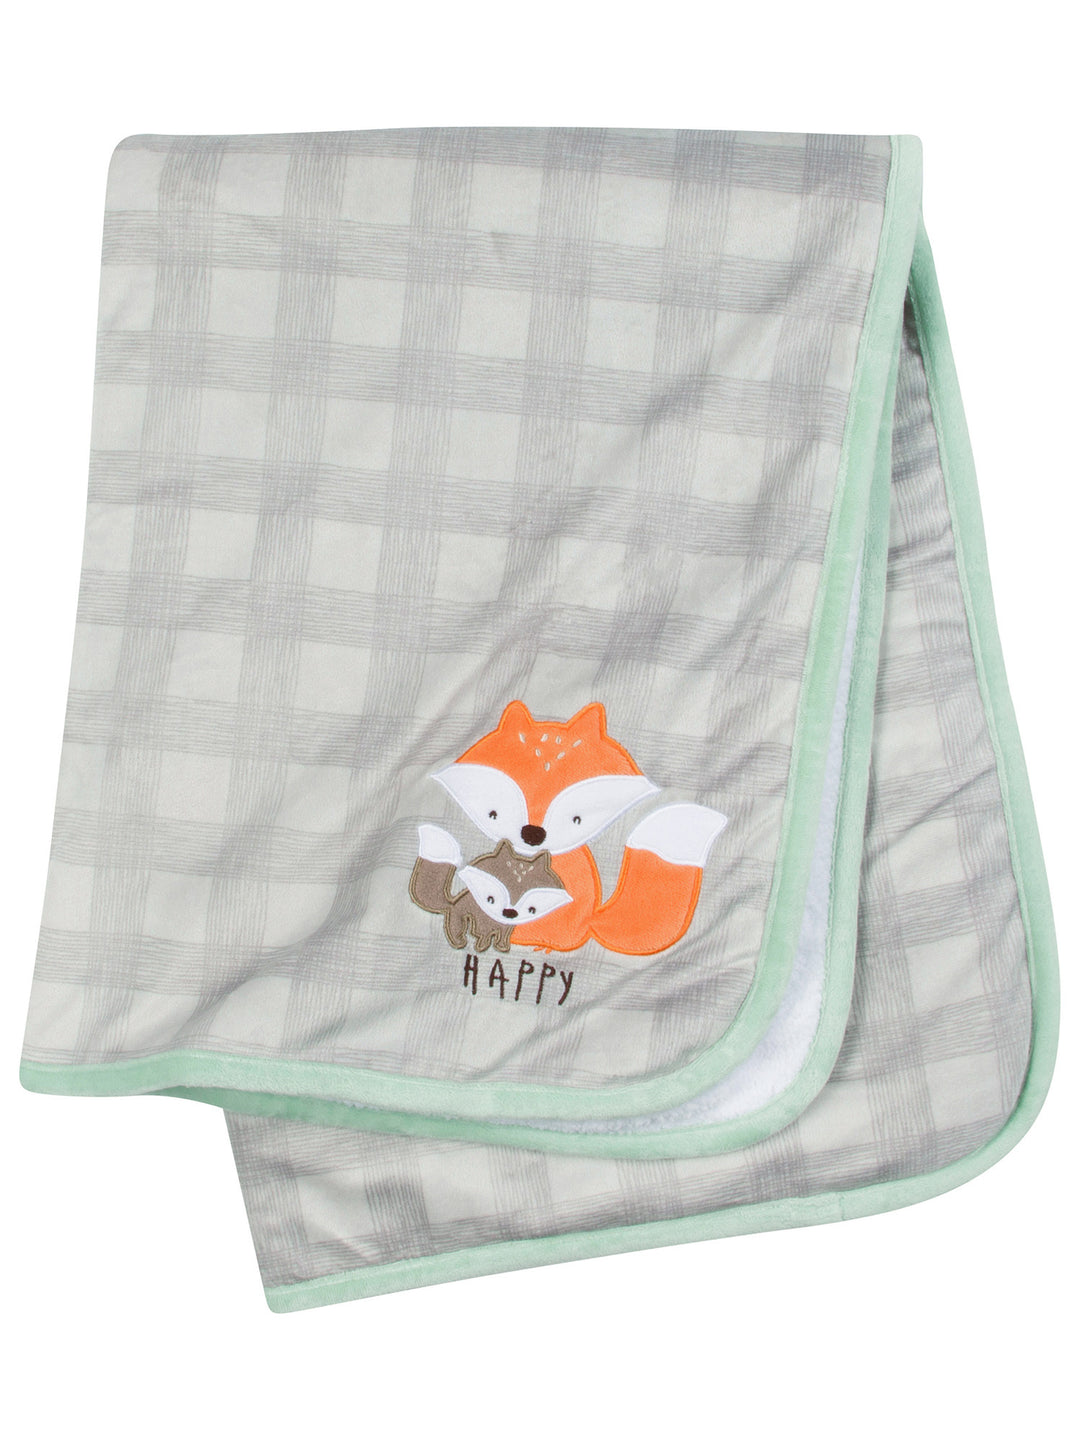 Gerber - 1 Pack - Plush Blanket - Happy Fox